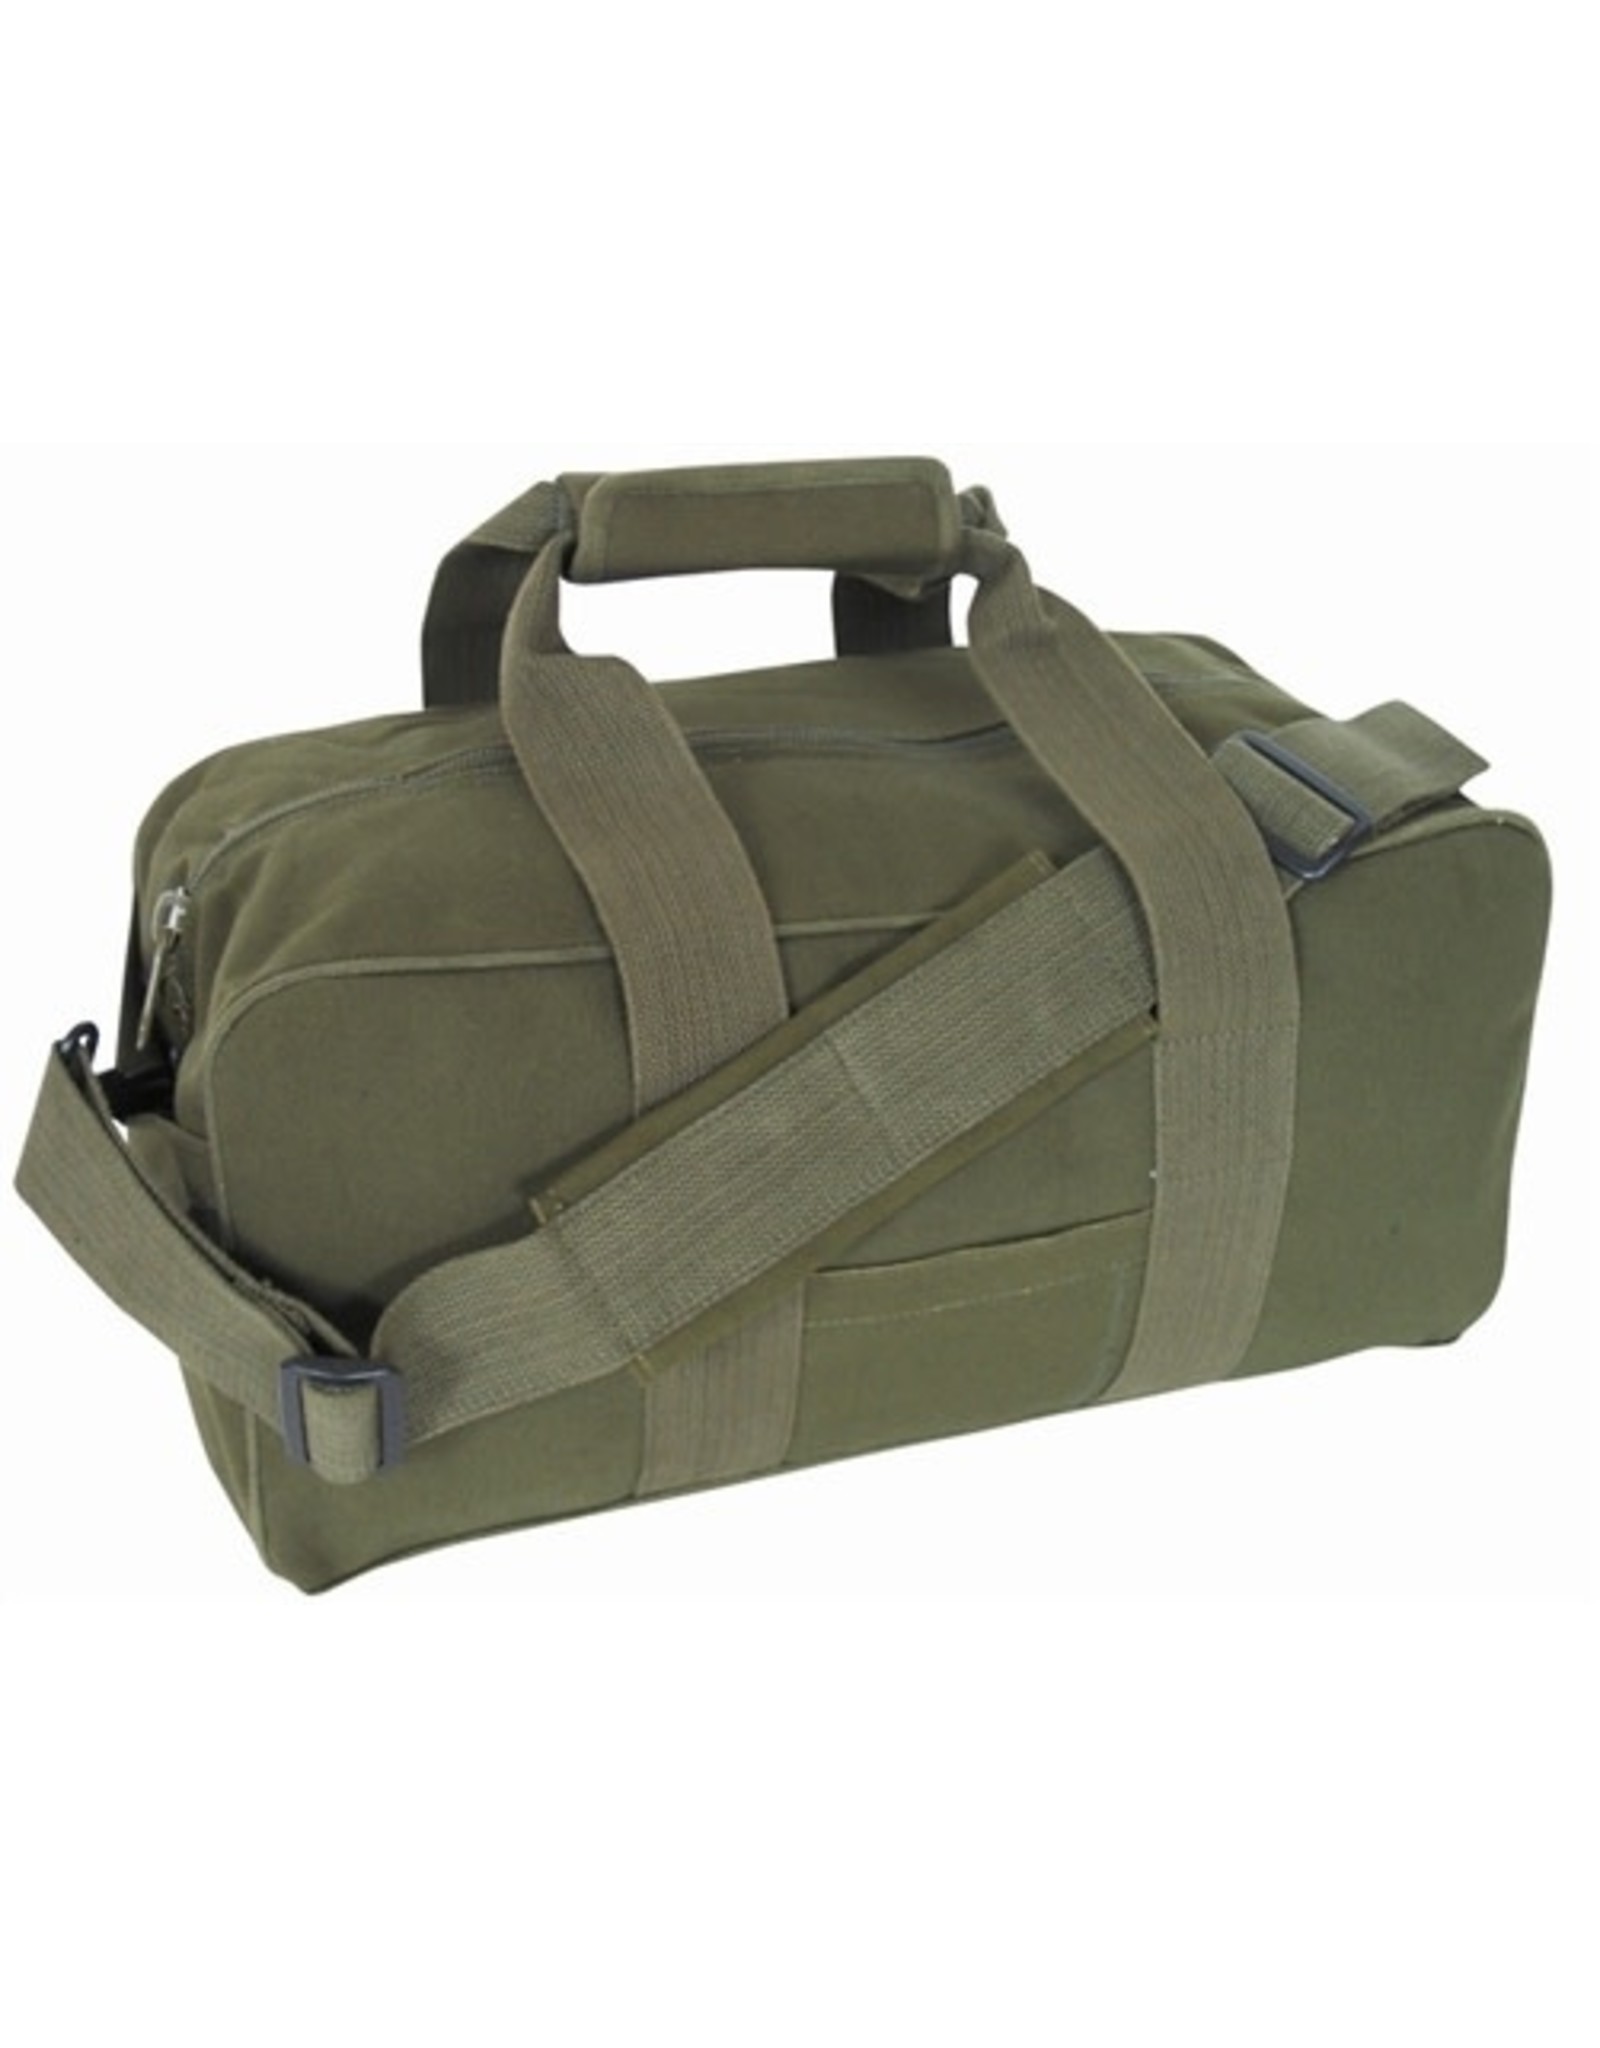 Military Style Canvas Gear Bag